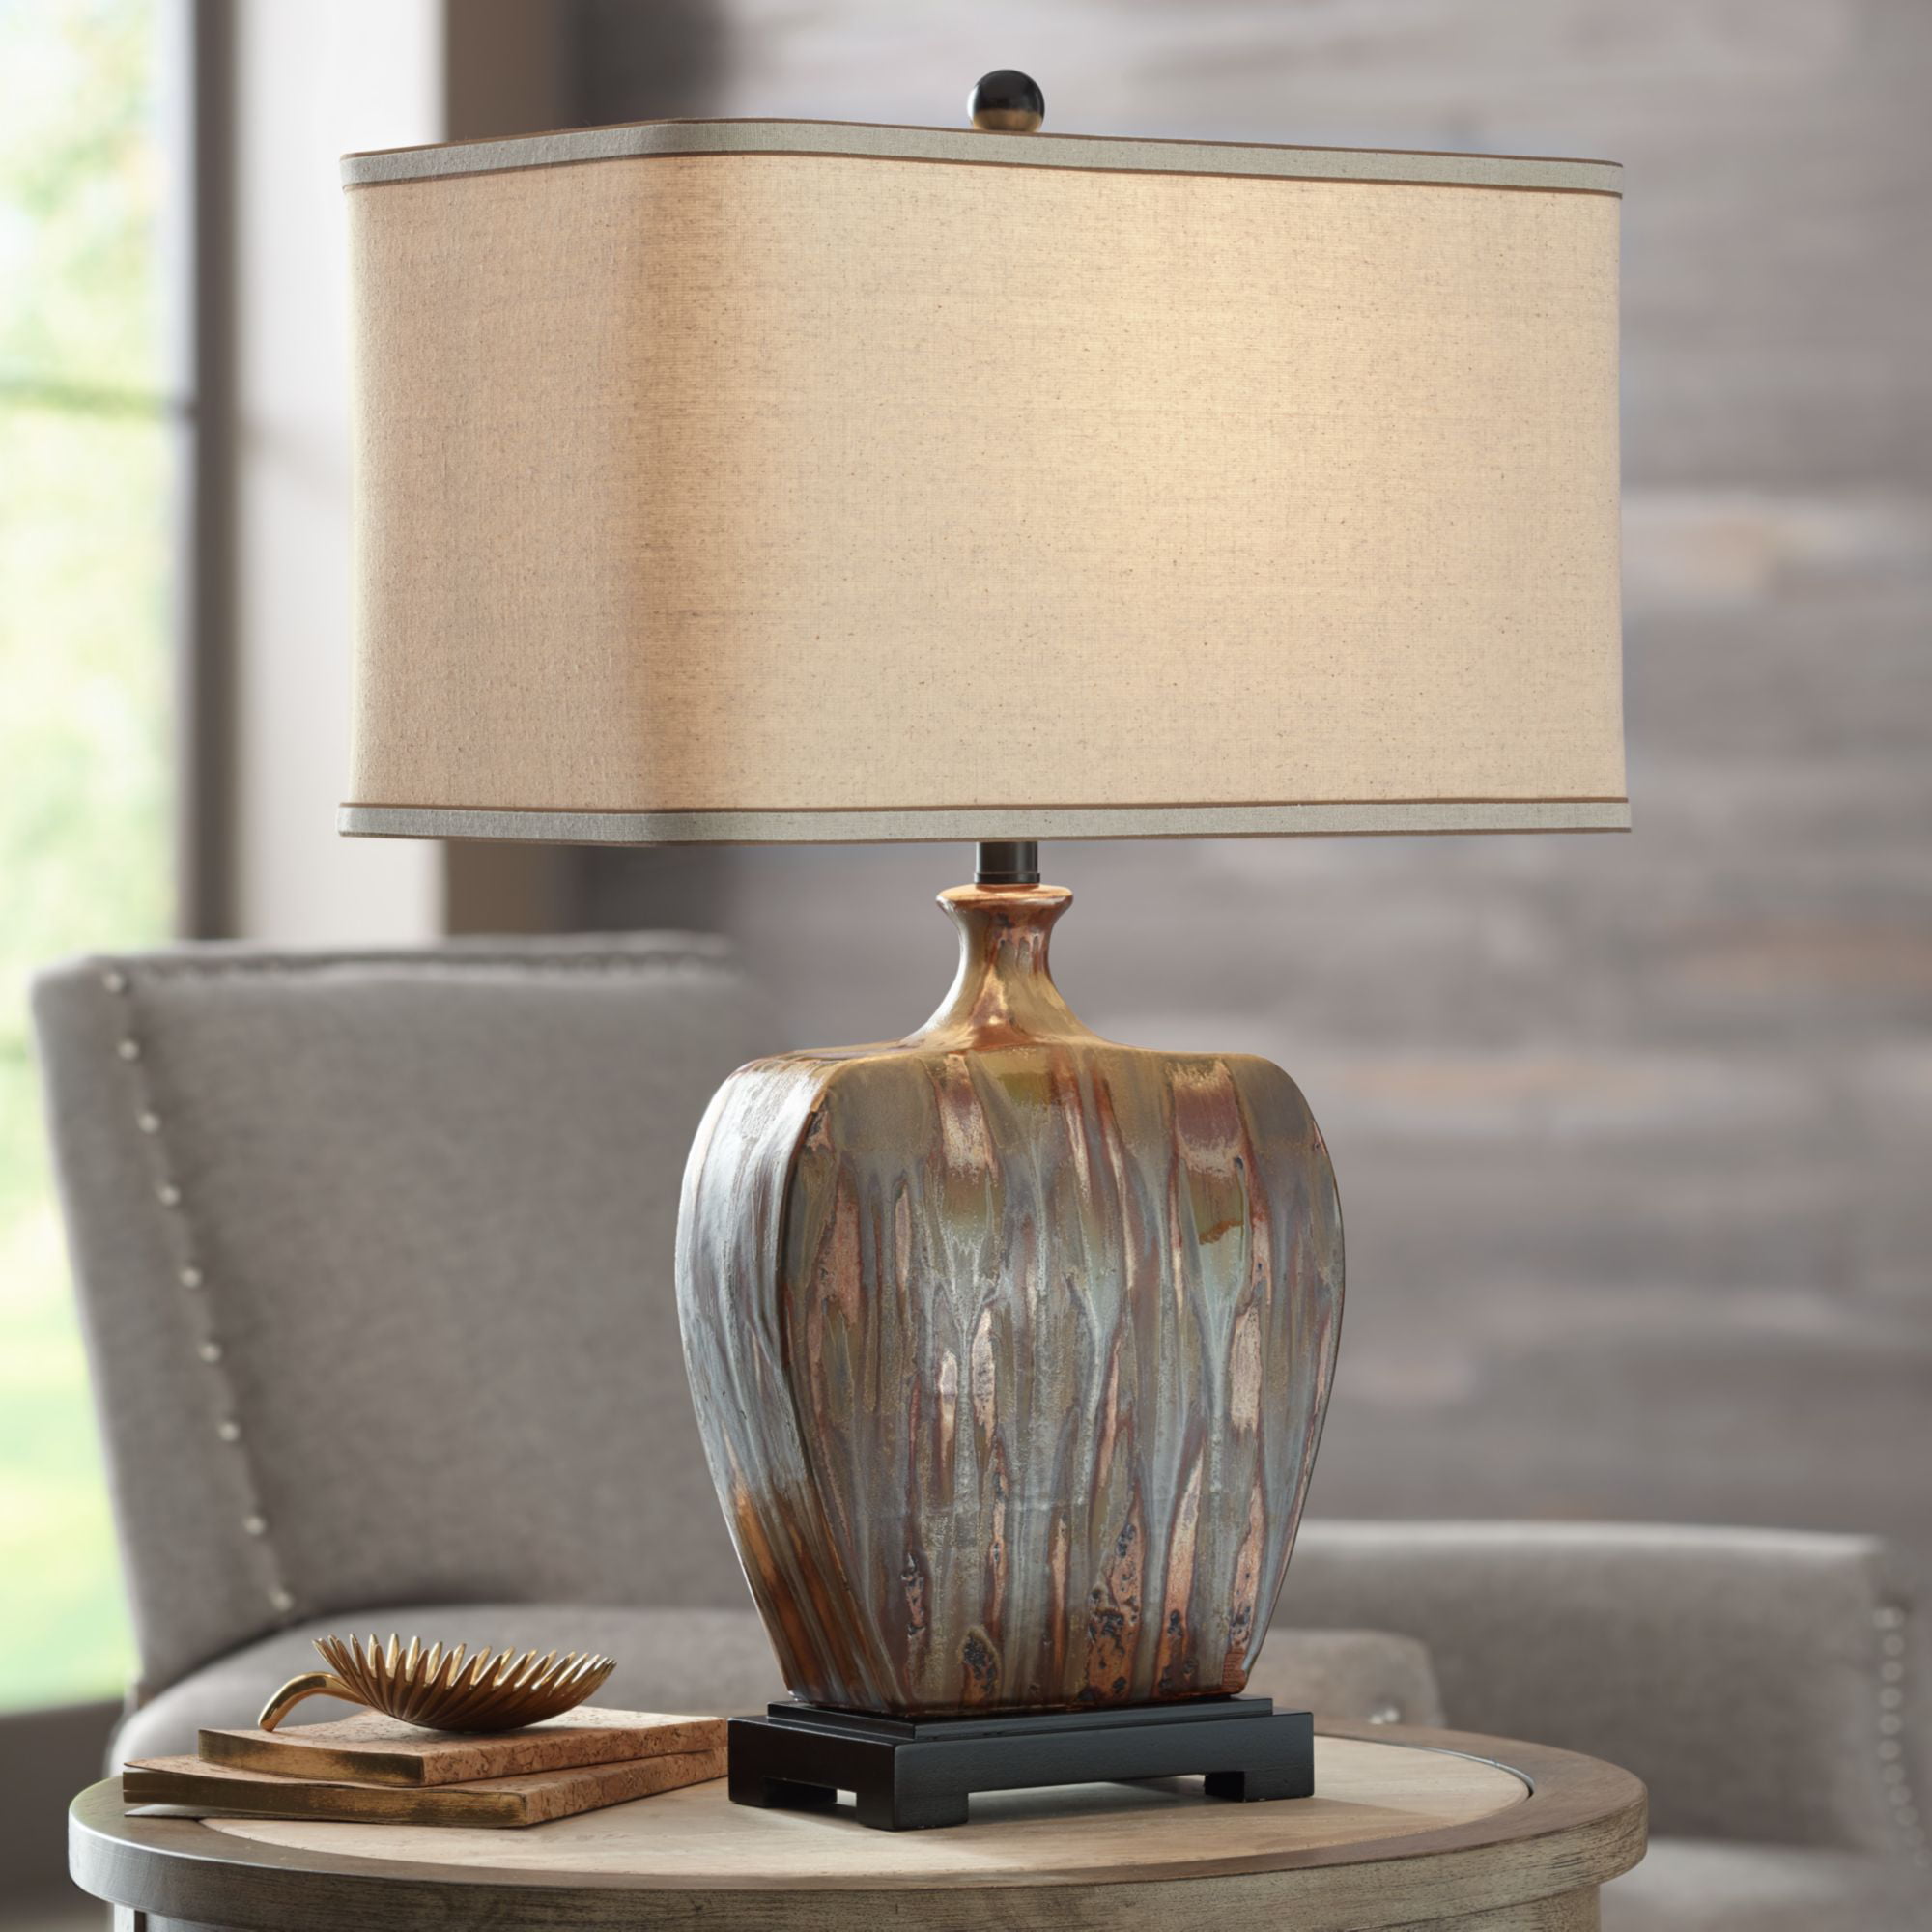 modern table lamp rectangular shade